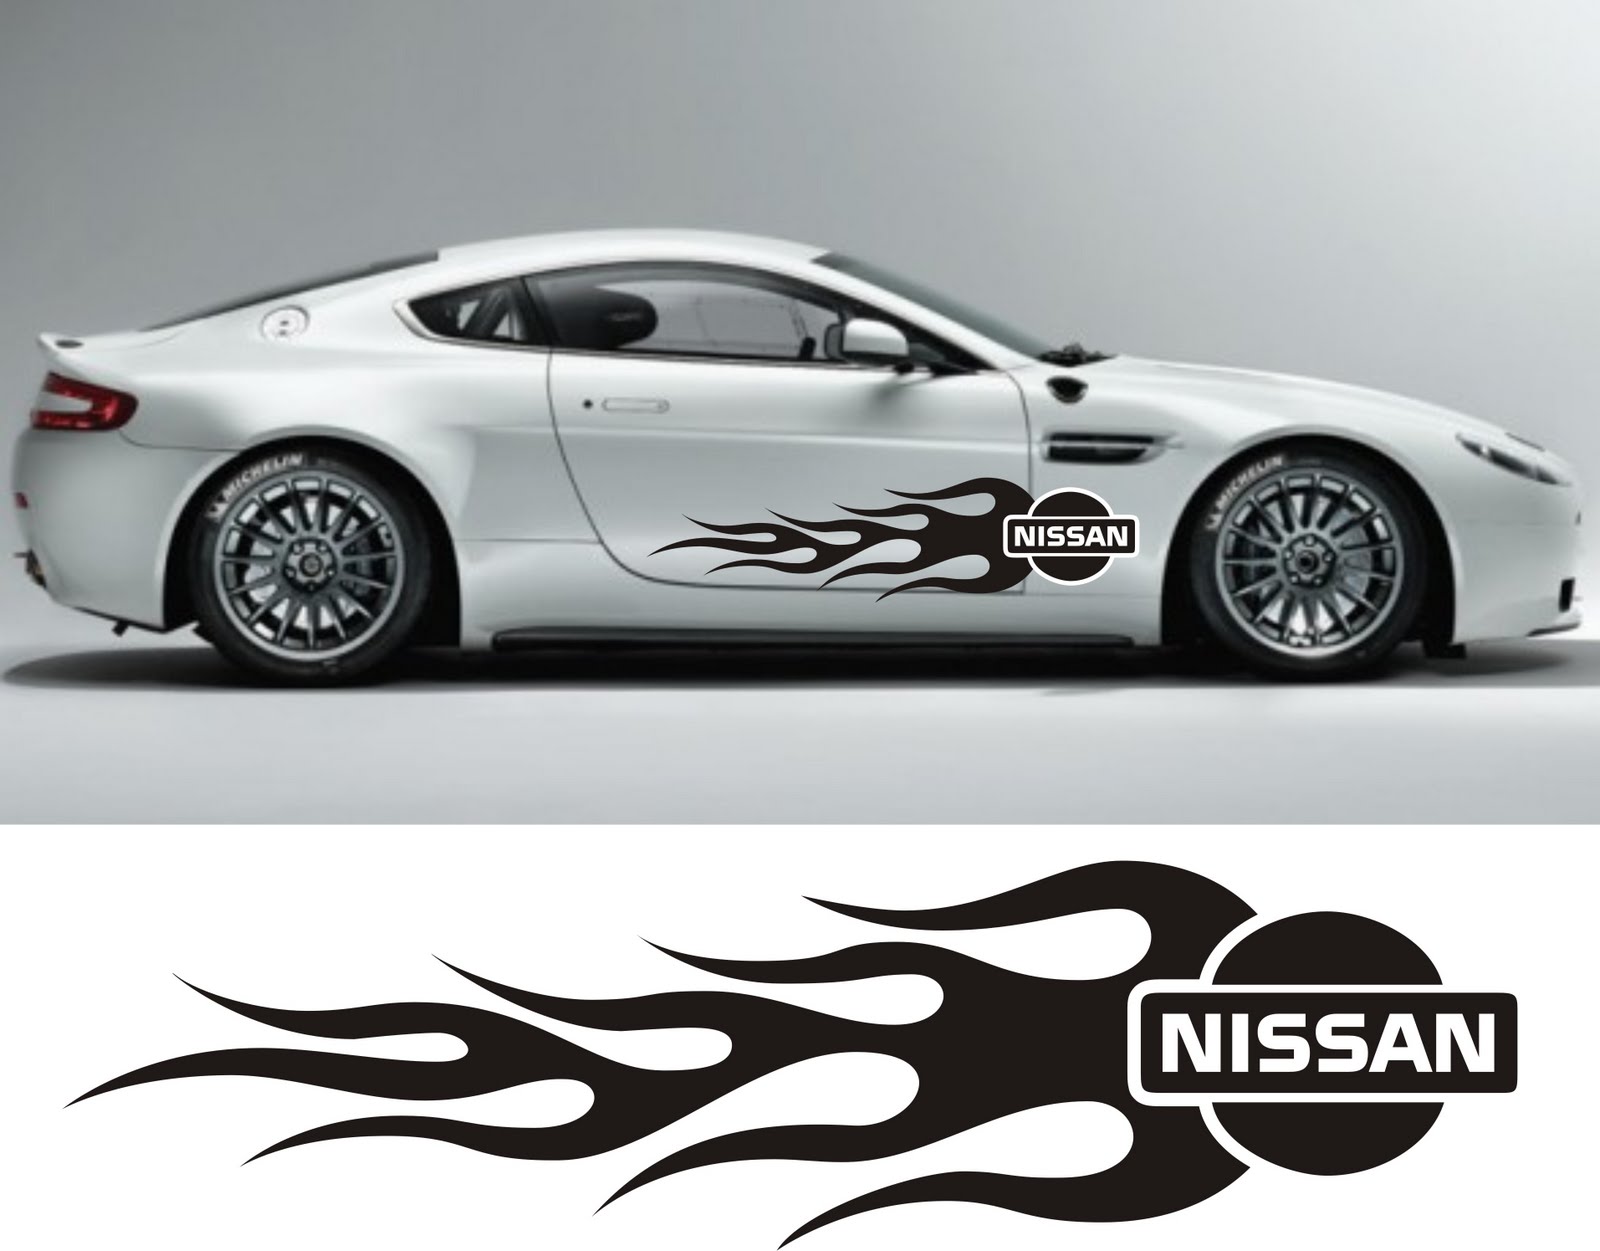 http://3.bp.blogspot.com/-PJ_KCDxwi-Q/ThWpDZtJsyI/AAAAAAAAbek/8lsRU3wfJrQ/s1600/Nissan-logo5.jpg